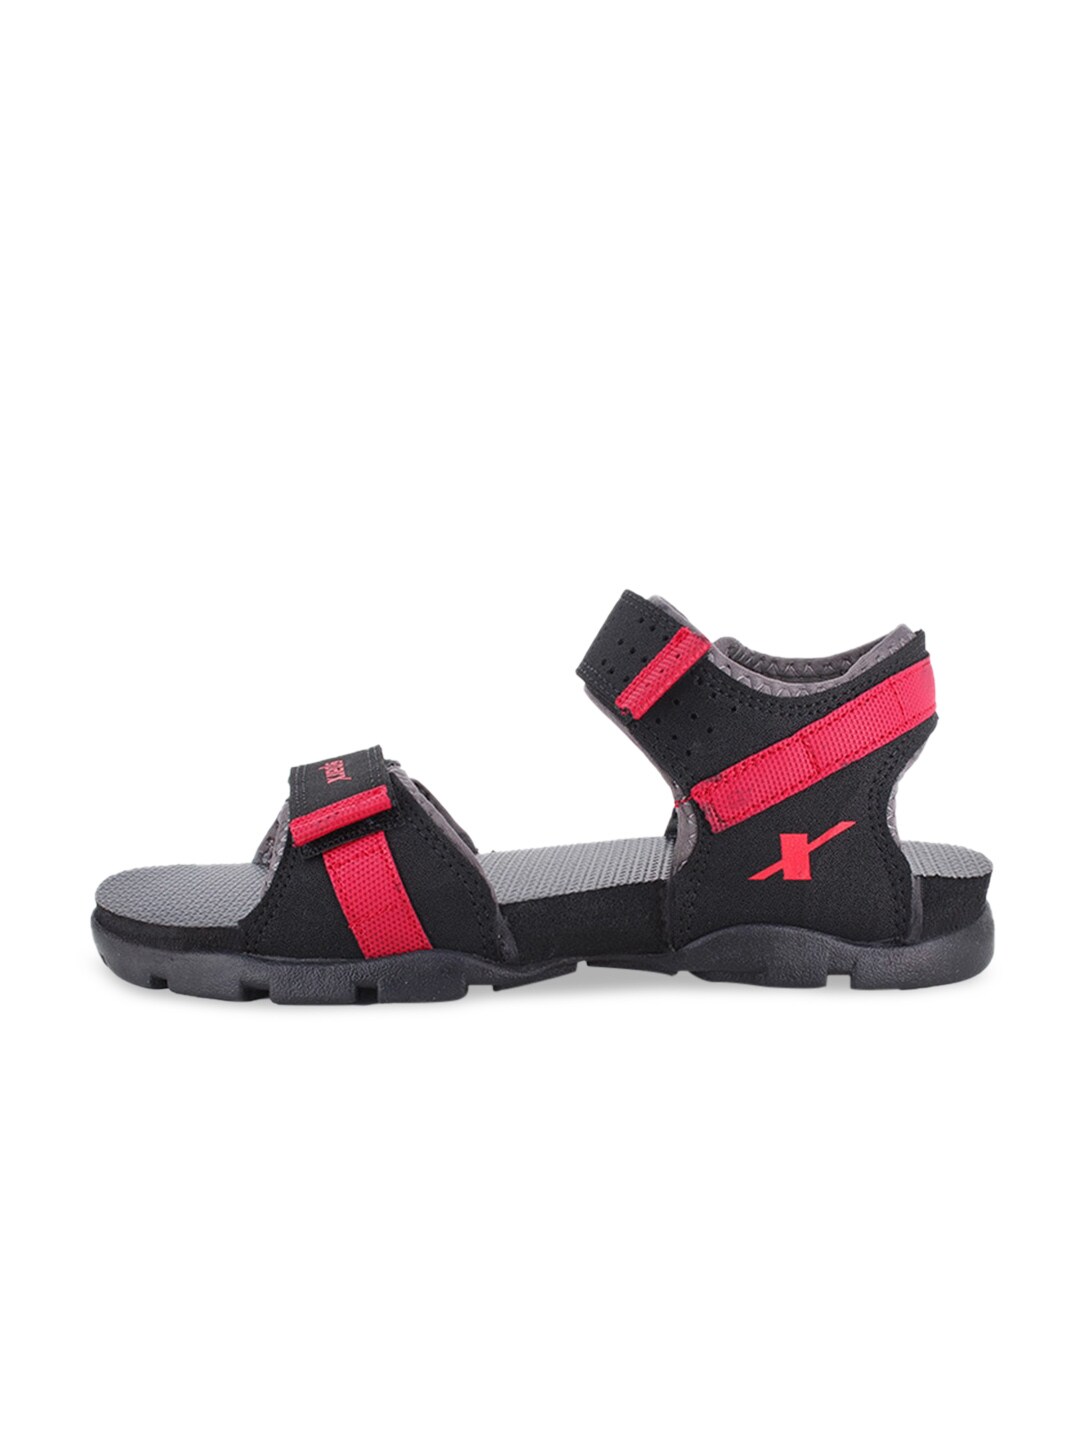 Buy Men Red, Black Sports Sandals online | Looksgud.in